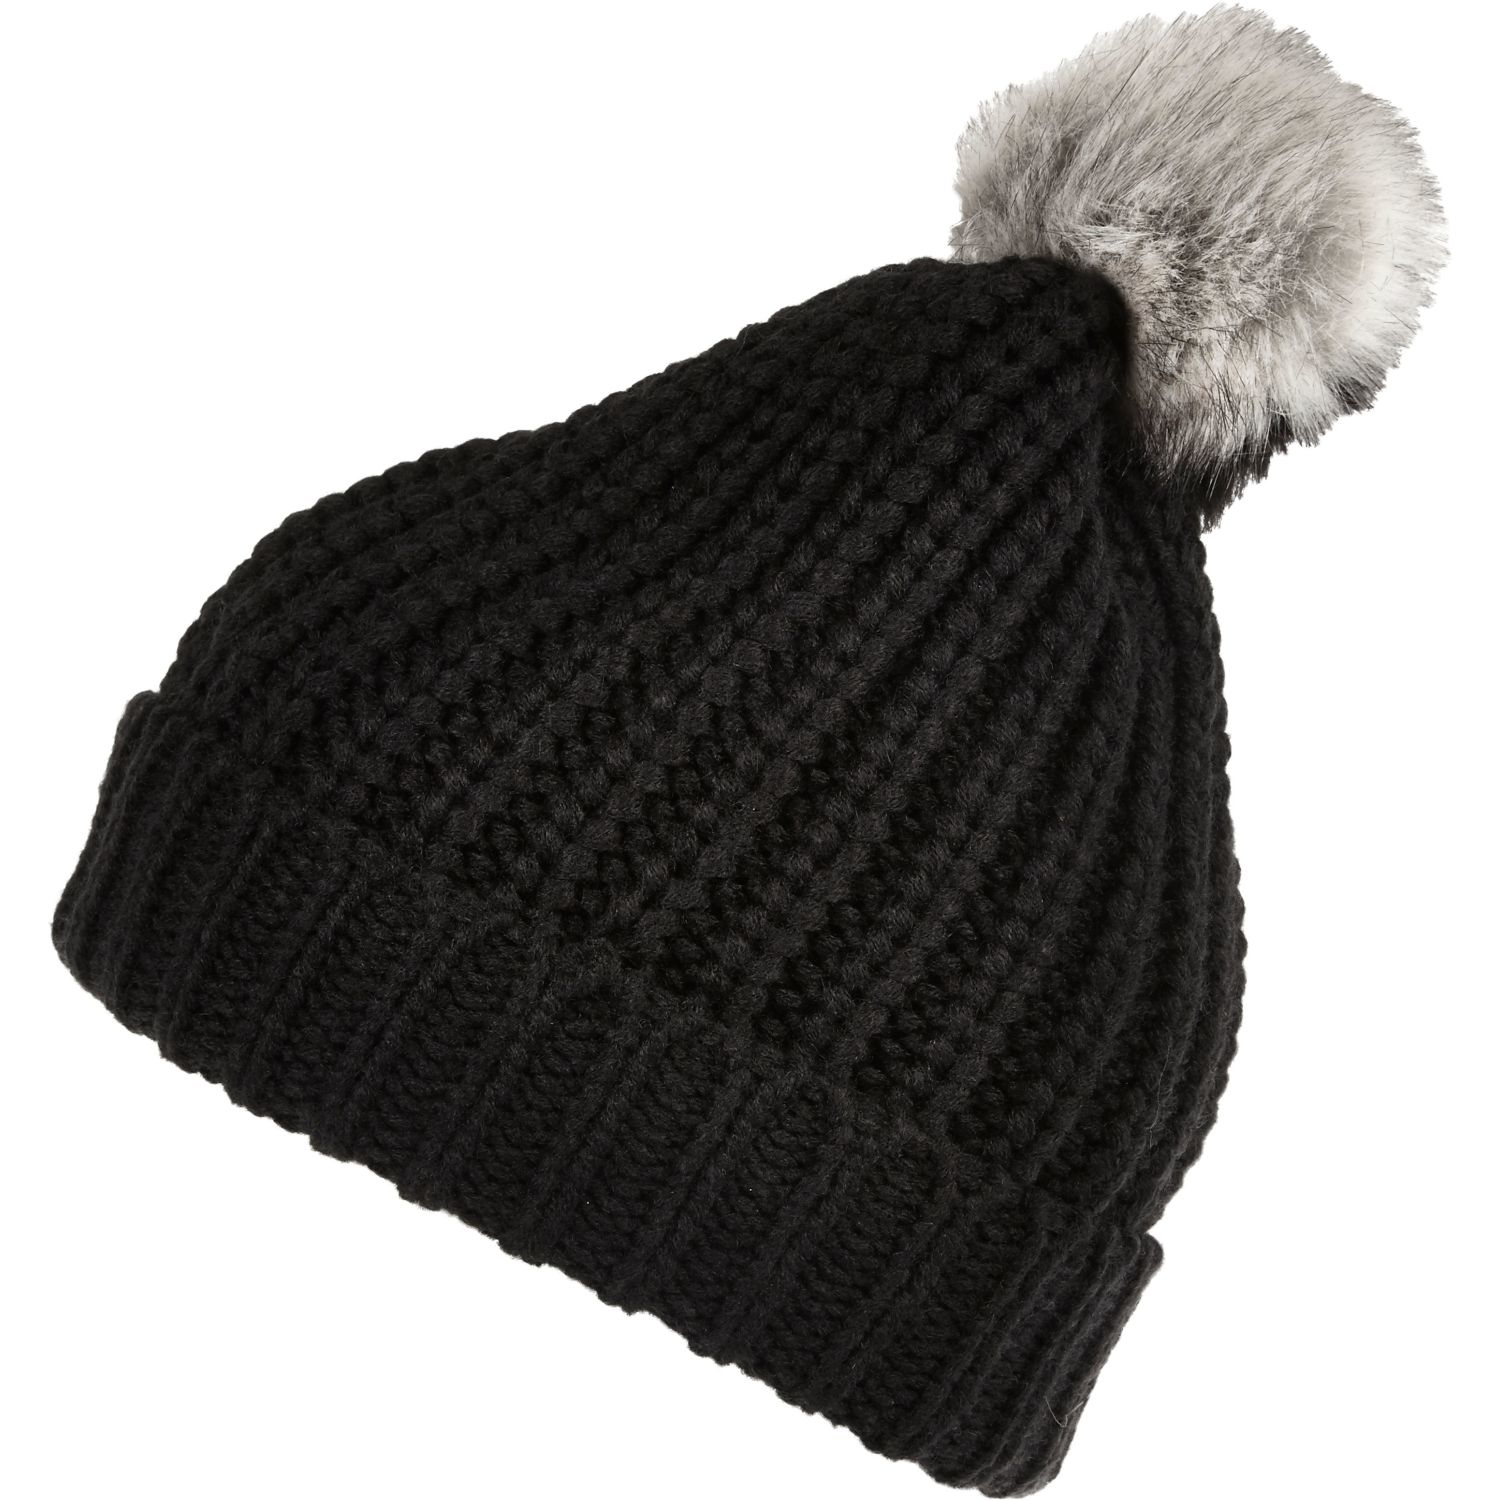 River island Black Knitted Pom Pom Beanie Hat in Black | Lyst